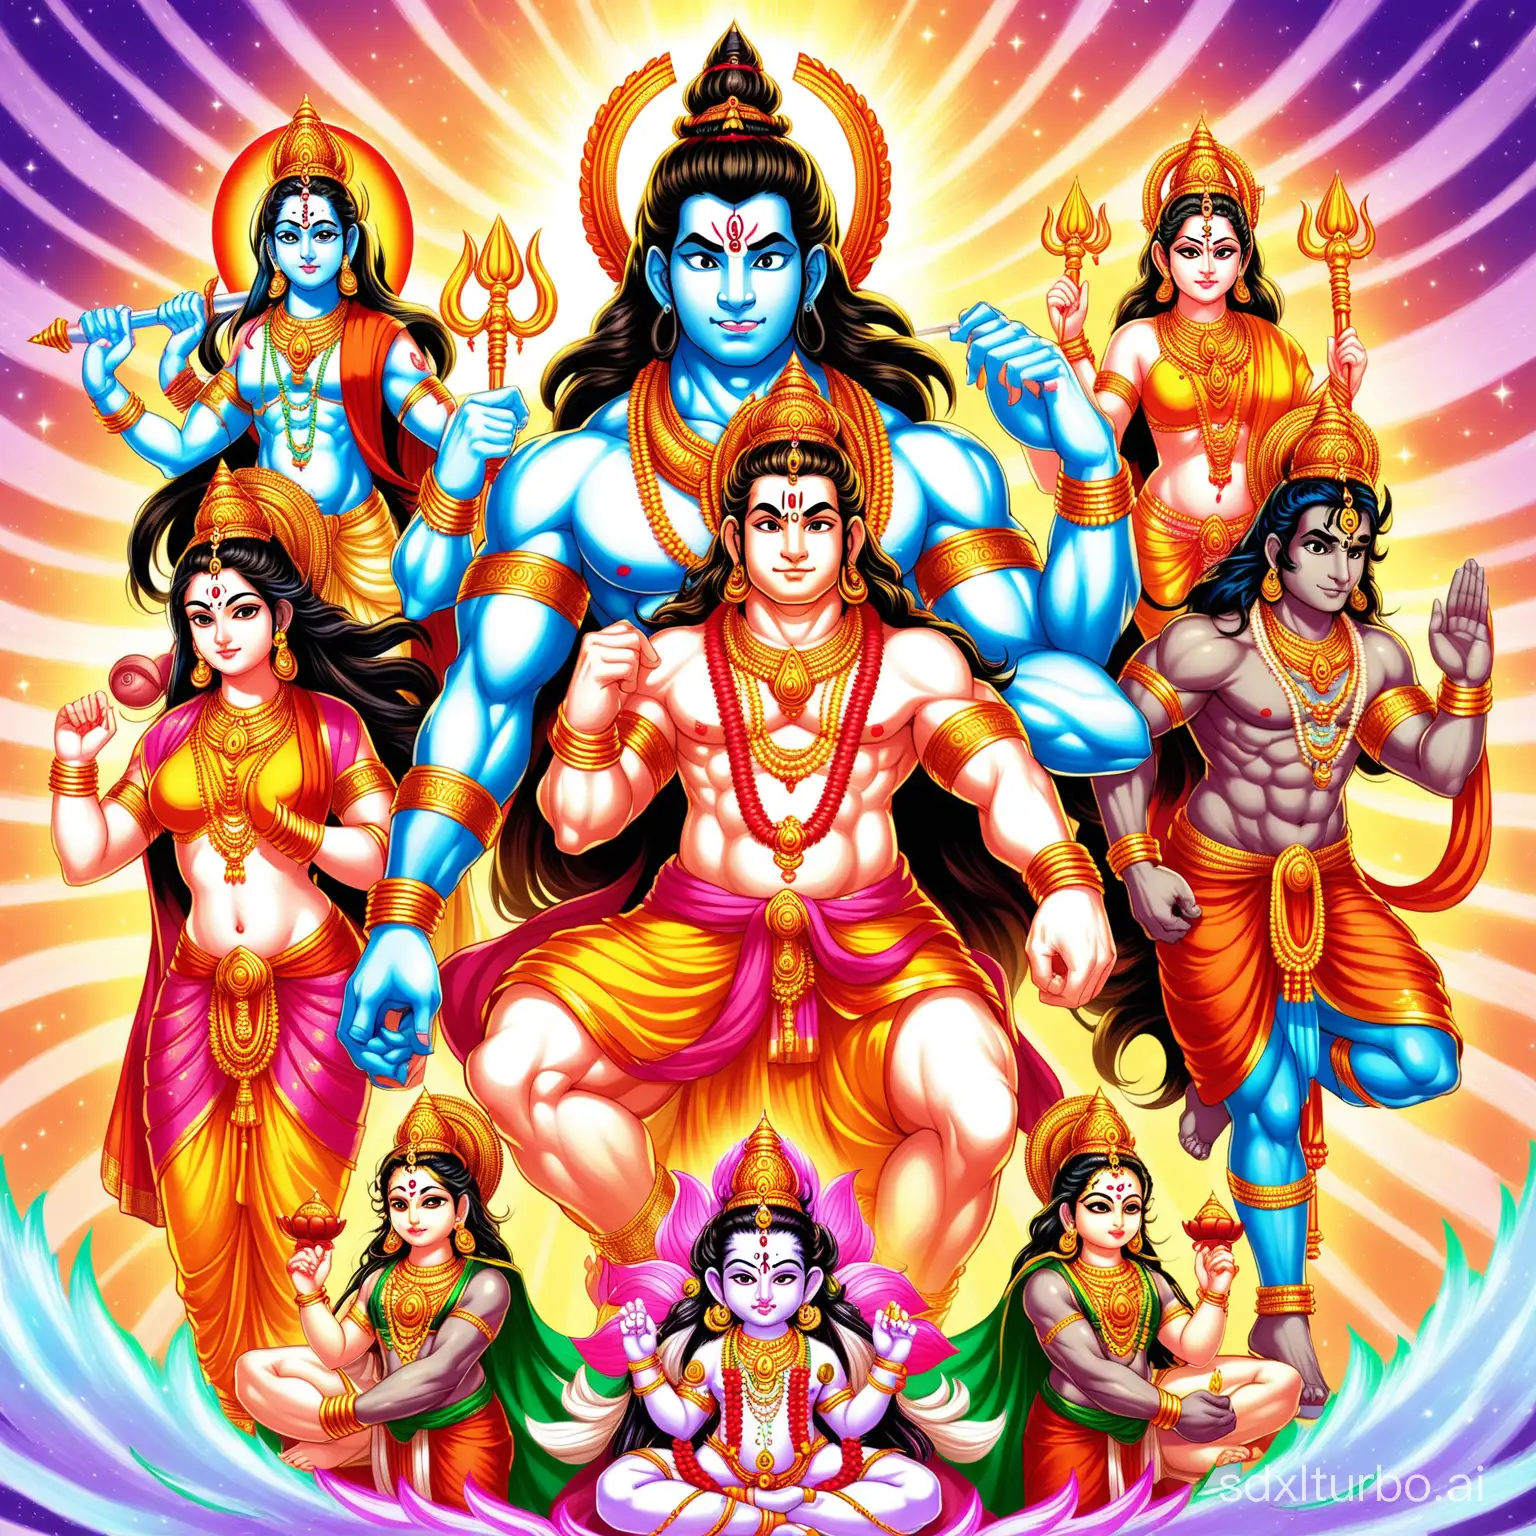 Hanuman, Lord Shiva, Ram, Ganpati, Vishnu, Brahma, Parvati, Mahakali, this all god in one picture look like an Indian superhero